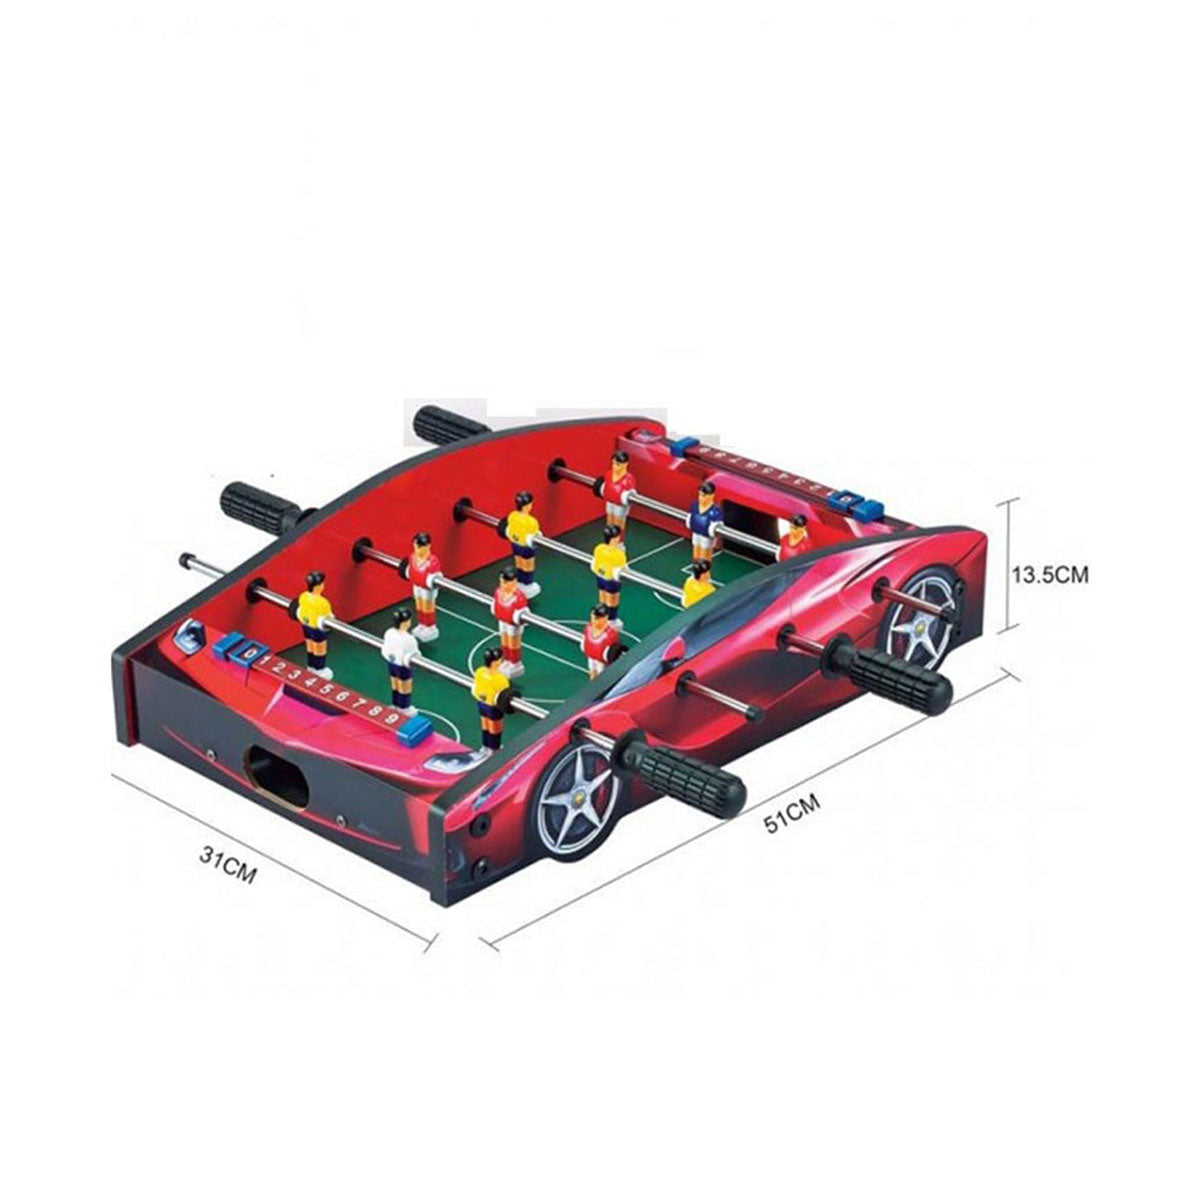 Football - Car Shape Tabletop Games